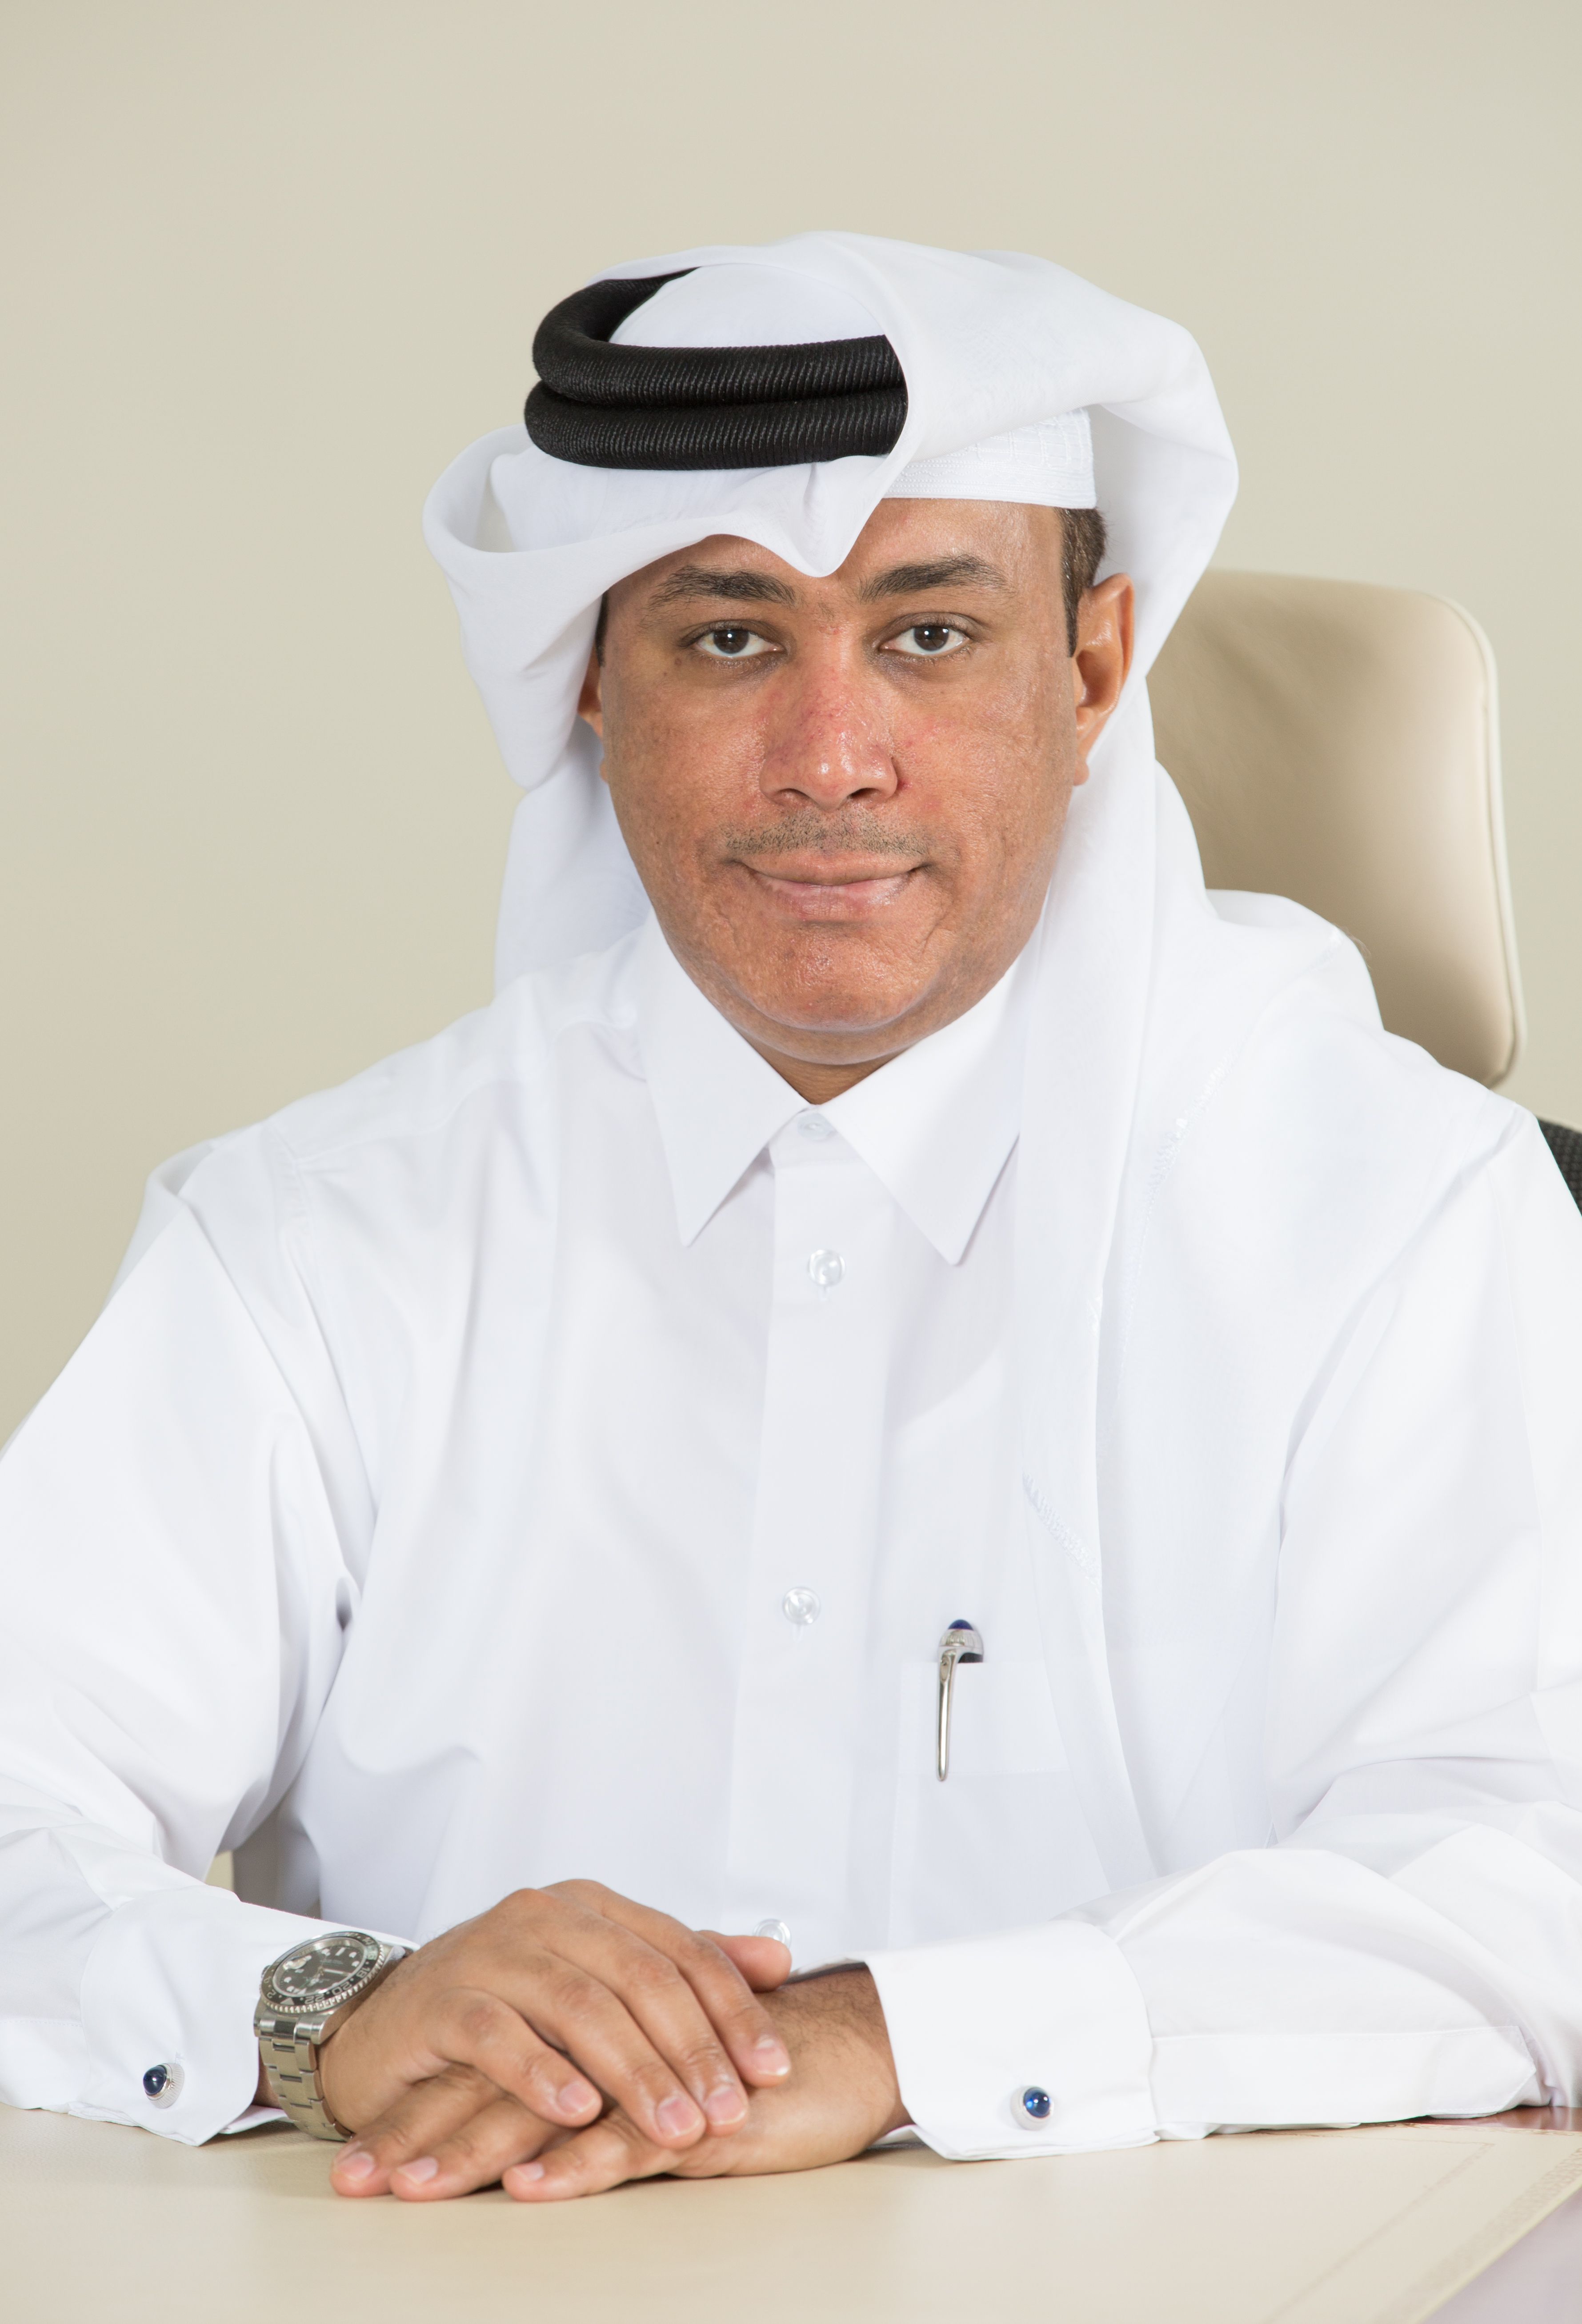 Mr. Ali Bin Abdulla Al-Dabbagh